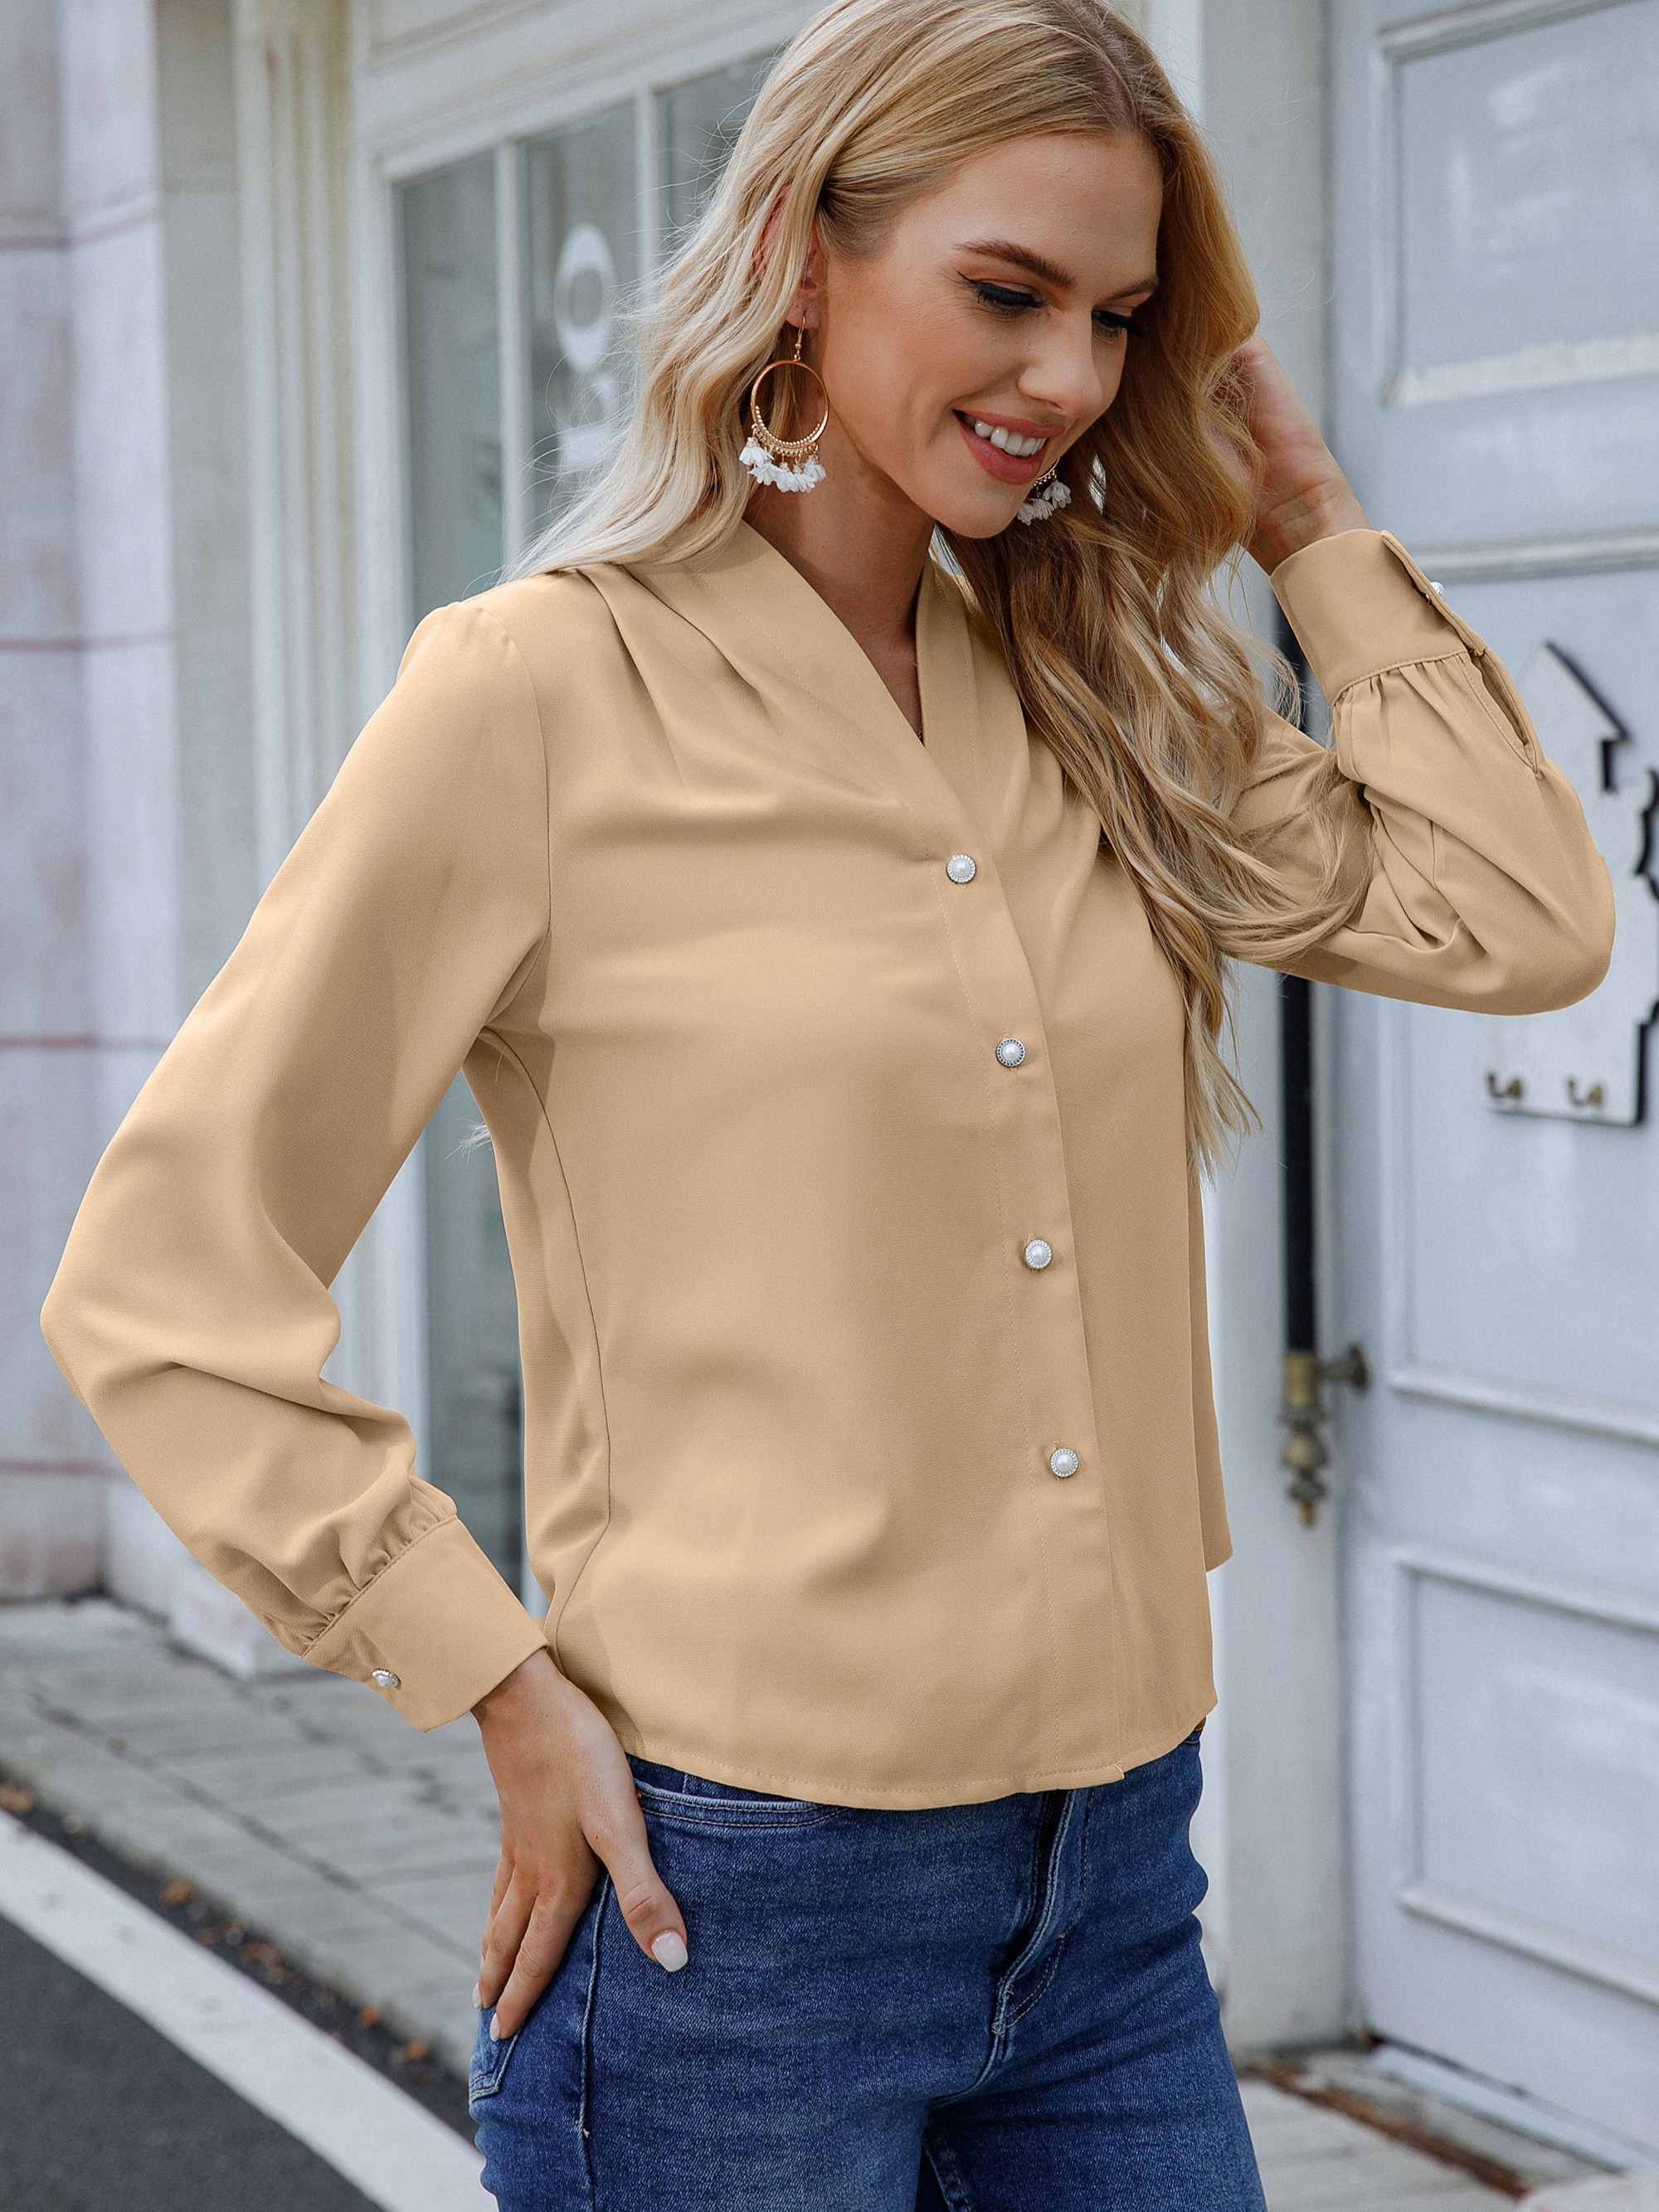 Down Long Blouses Casual Shirts Tops Women's Button Sleeve Women's Blouse